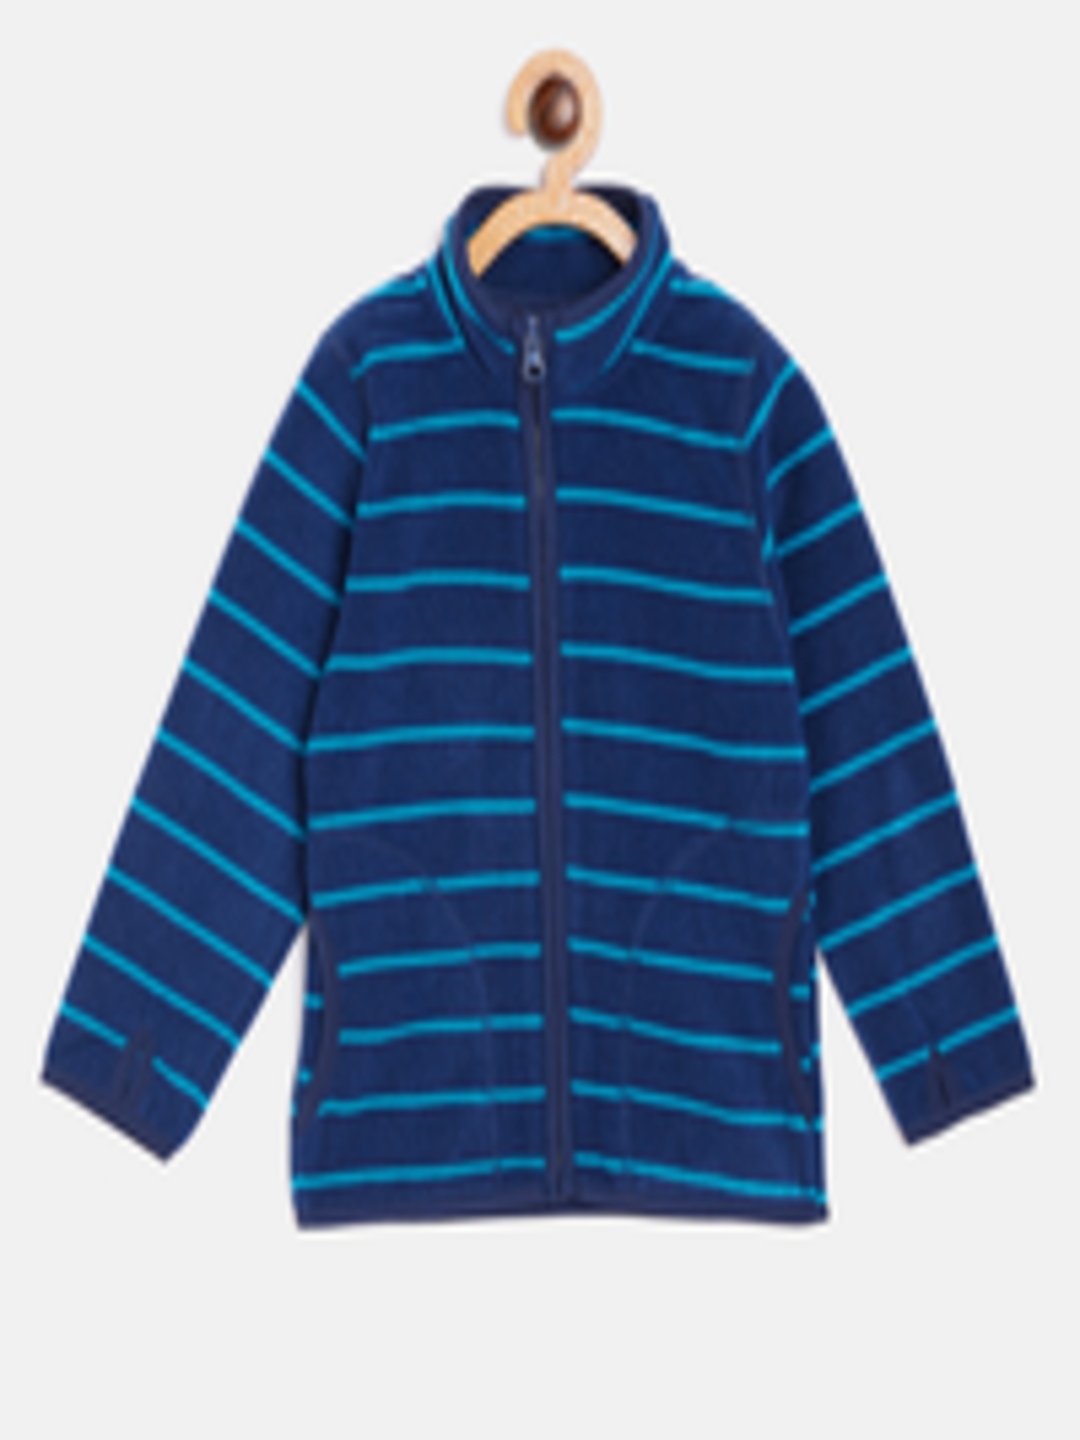 Buy COOL CLUB Boys Navy Blue Striped Fleece Sweatshirt - Sweatshirts ...